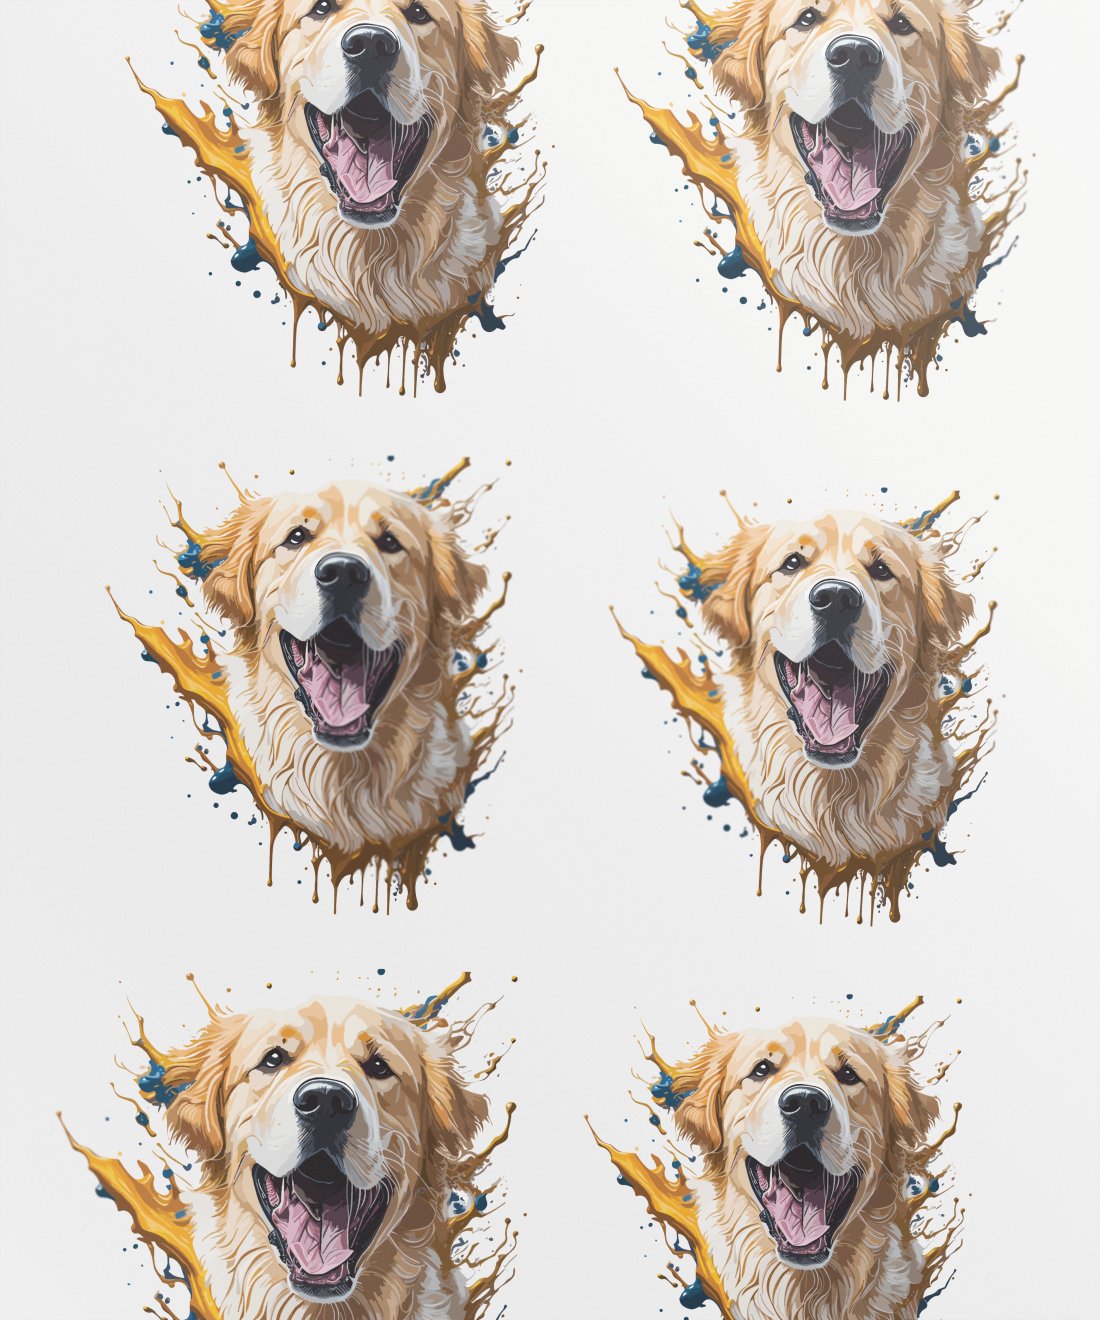 joyful-golden-retriever_-a-playful-painting-of-a-smiling-dog - Image 1